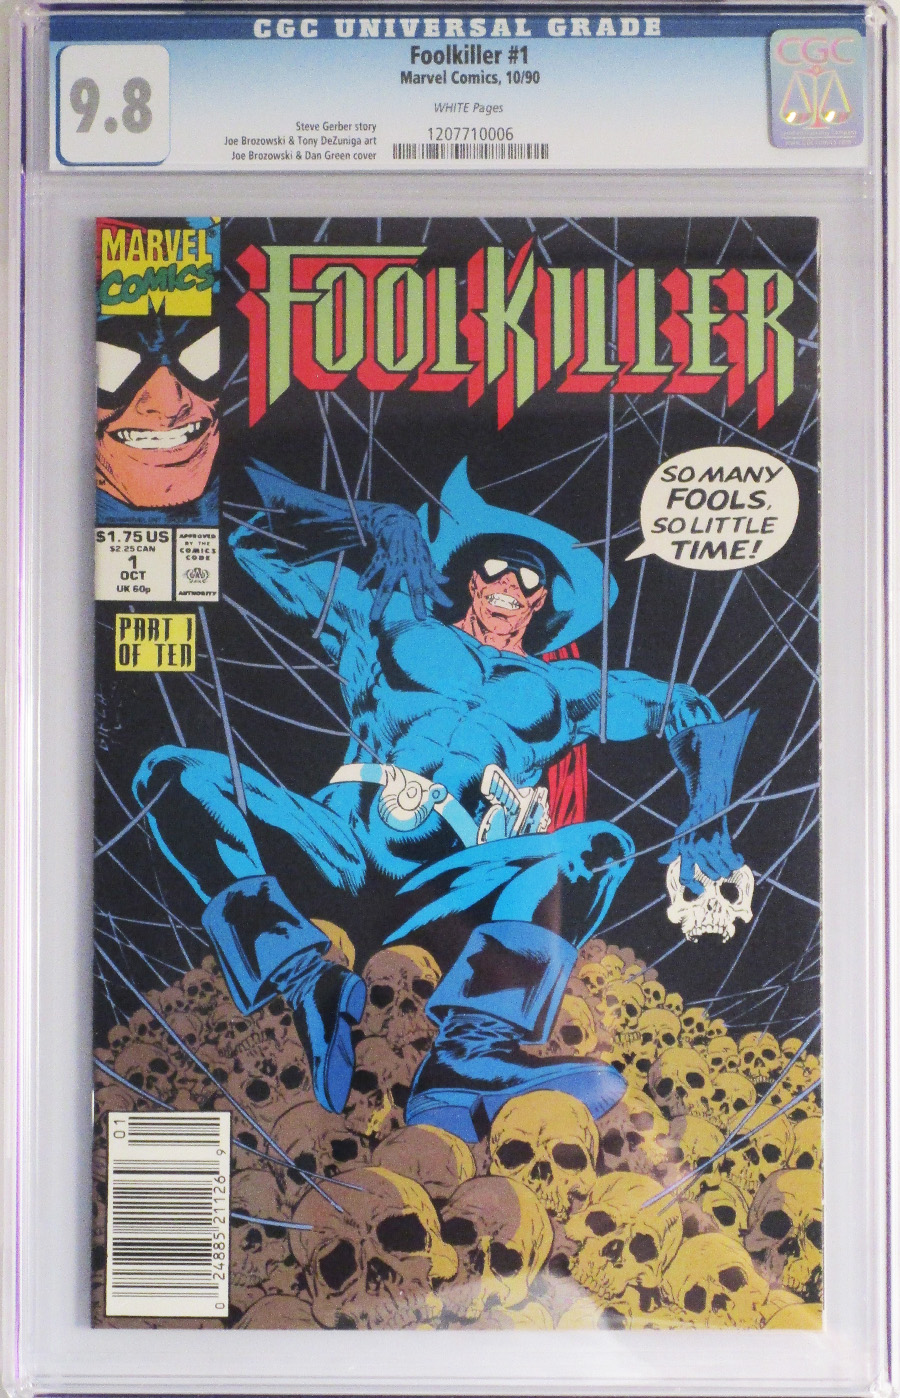 Foolkiller #1 Cover B CGC 9.8